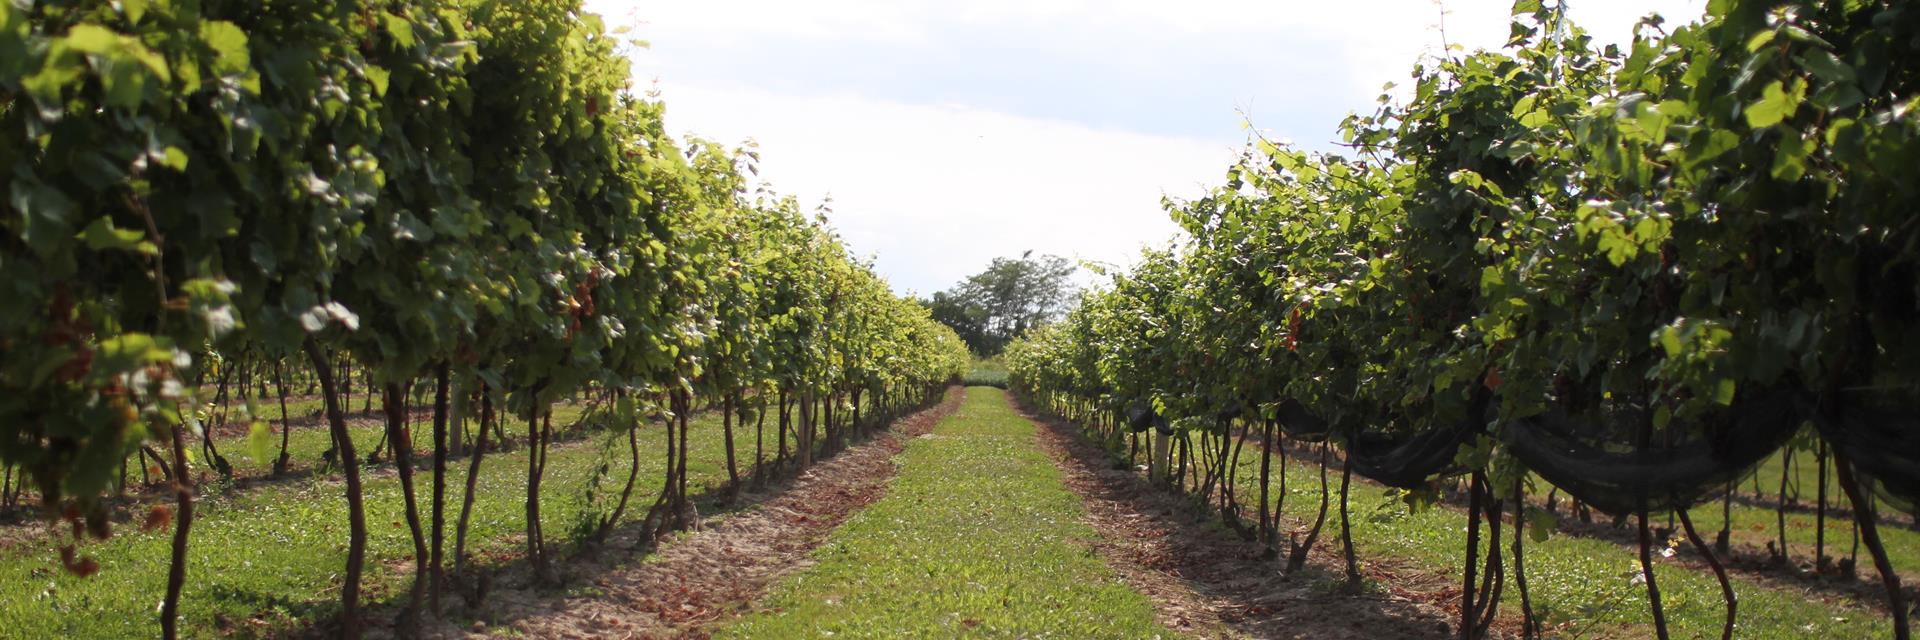 Vineyard with lush trees.